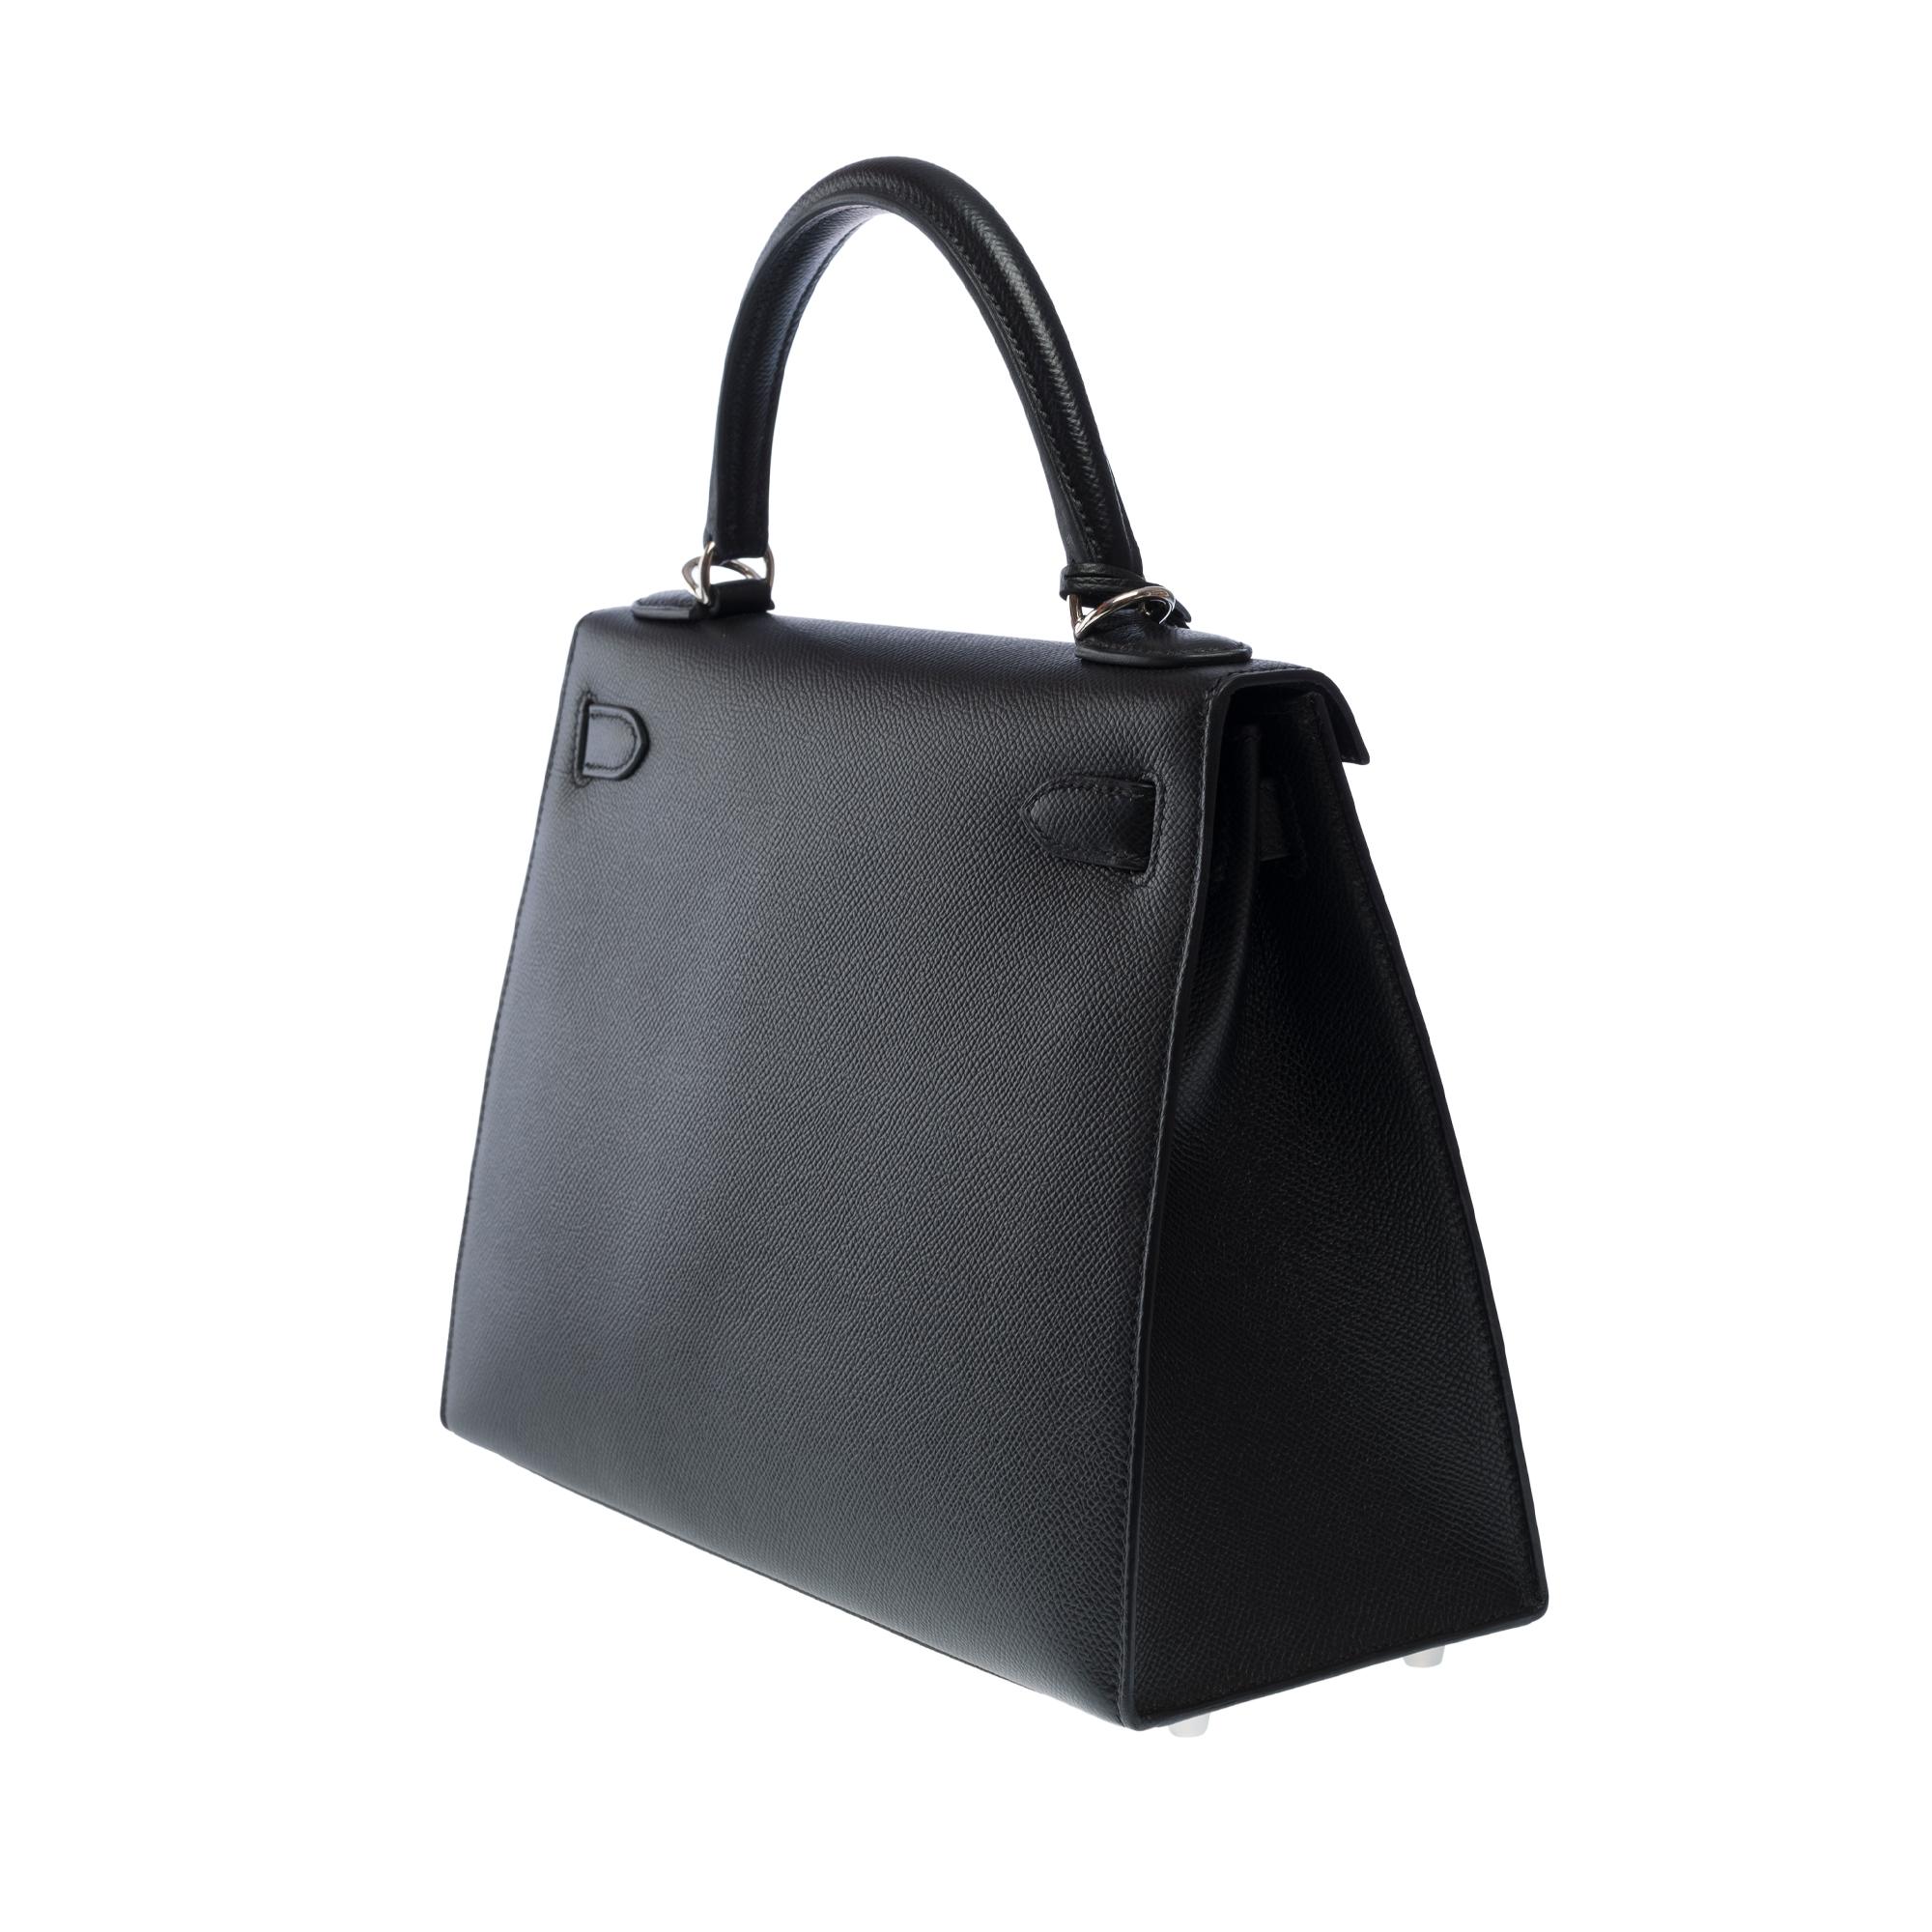 Women's Amazing Hermès Kelly 28 sellier handbag strap in black Epsom leather, SHW